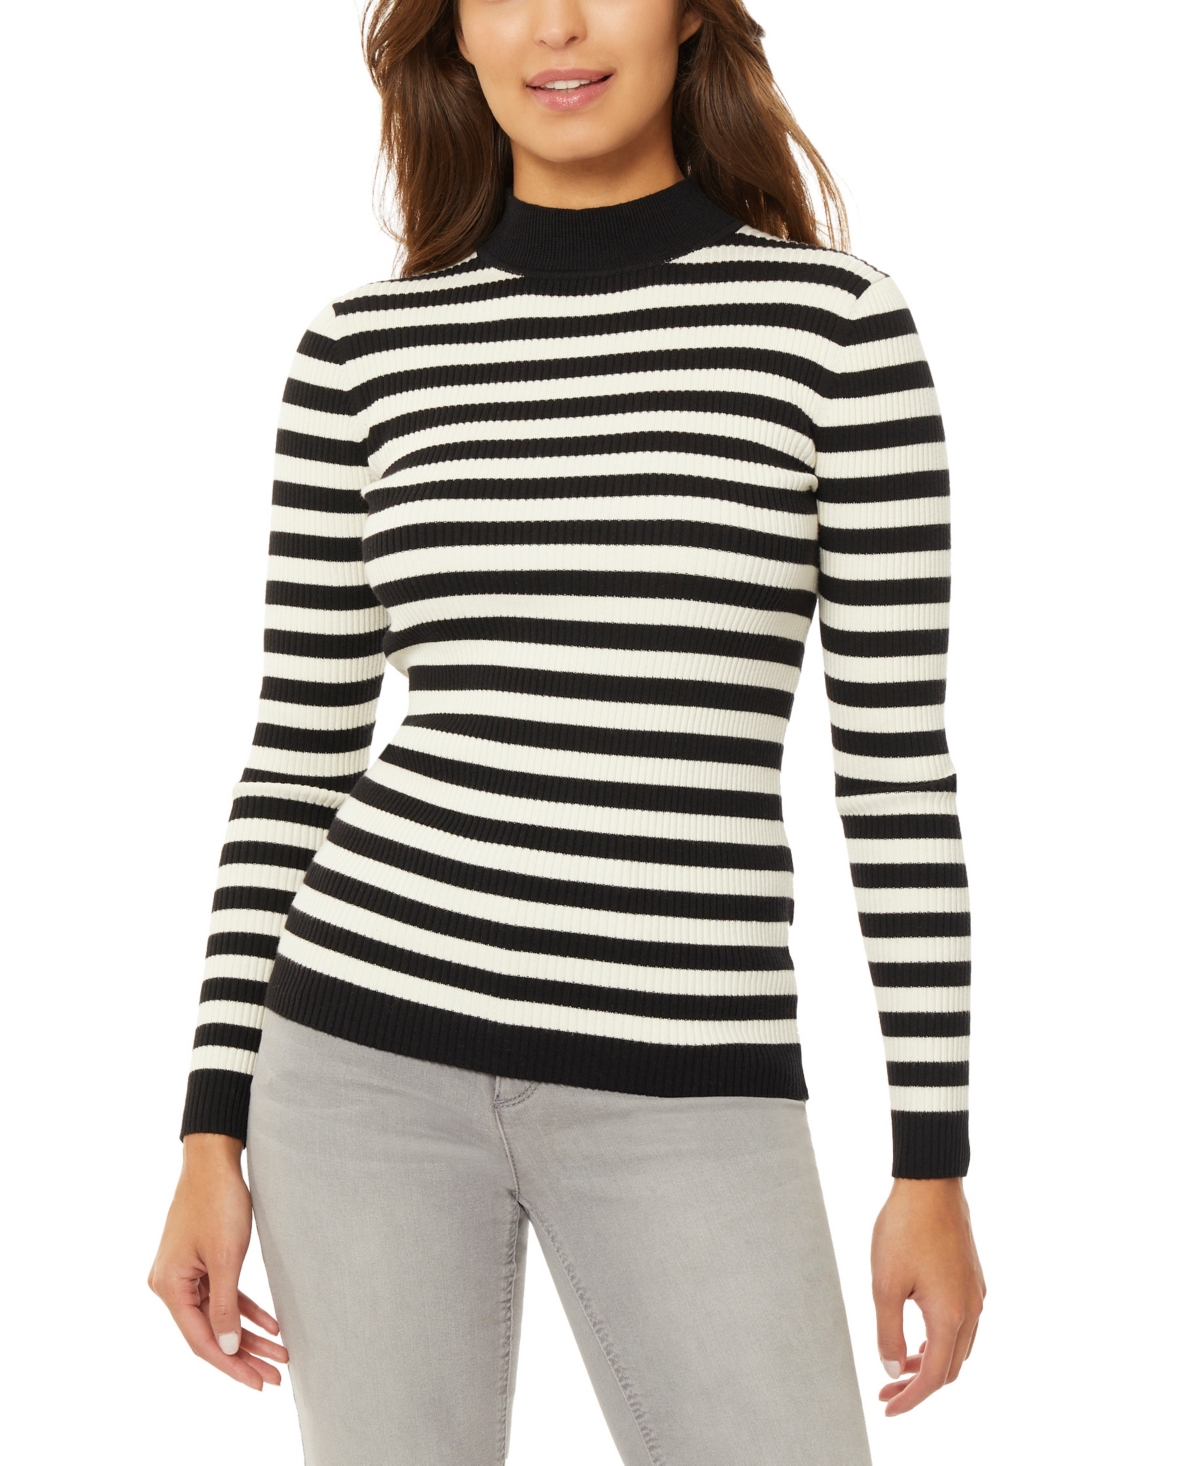 Jones New York Women's Striped Mock Neck Sweater